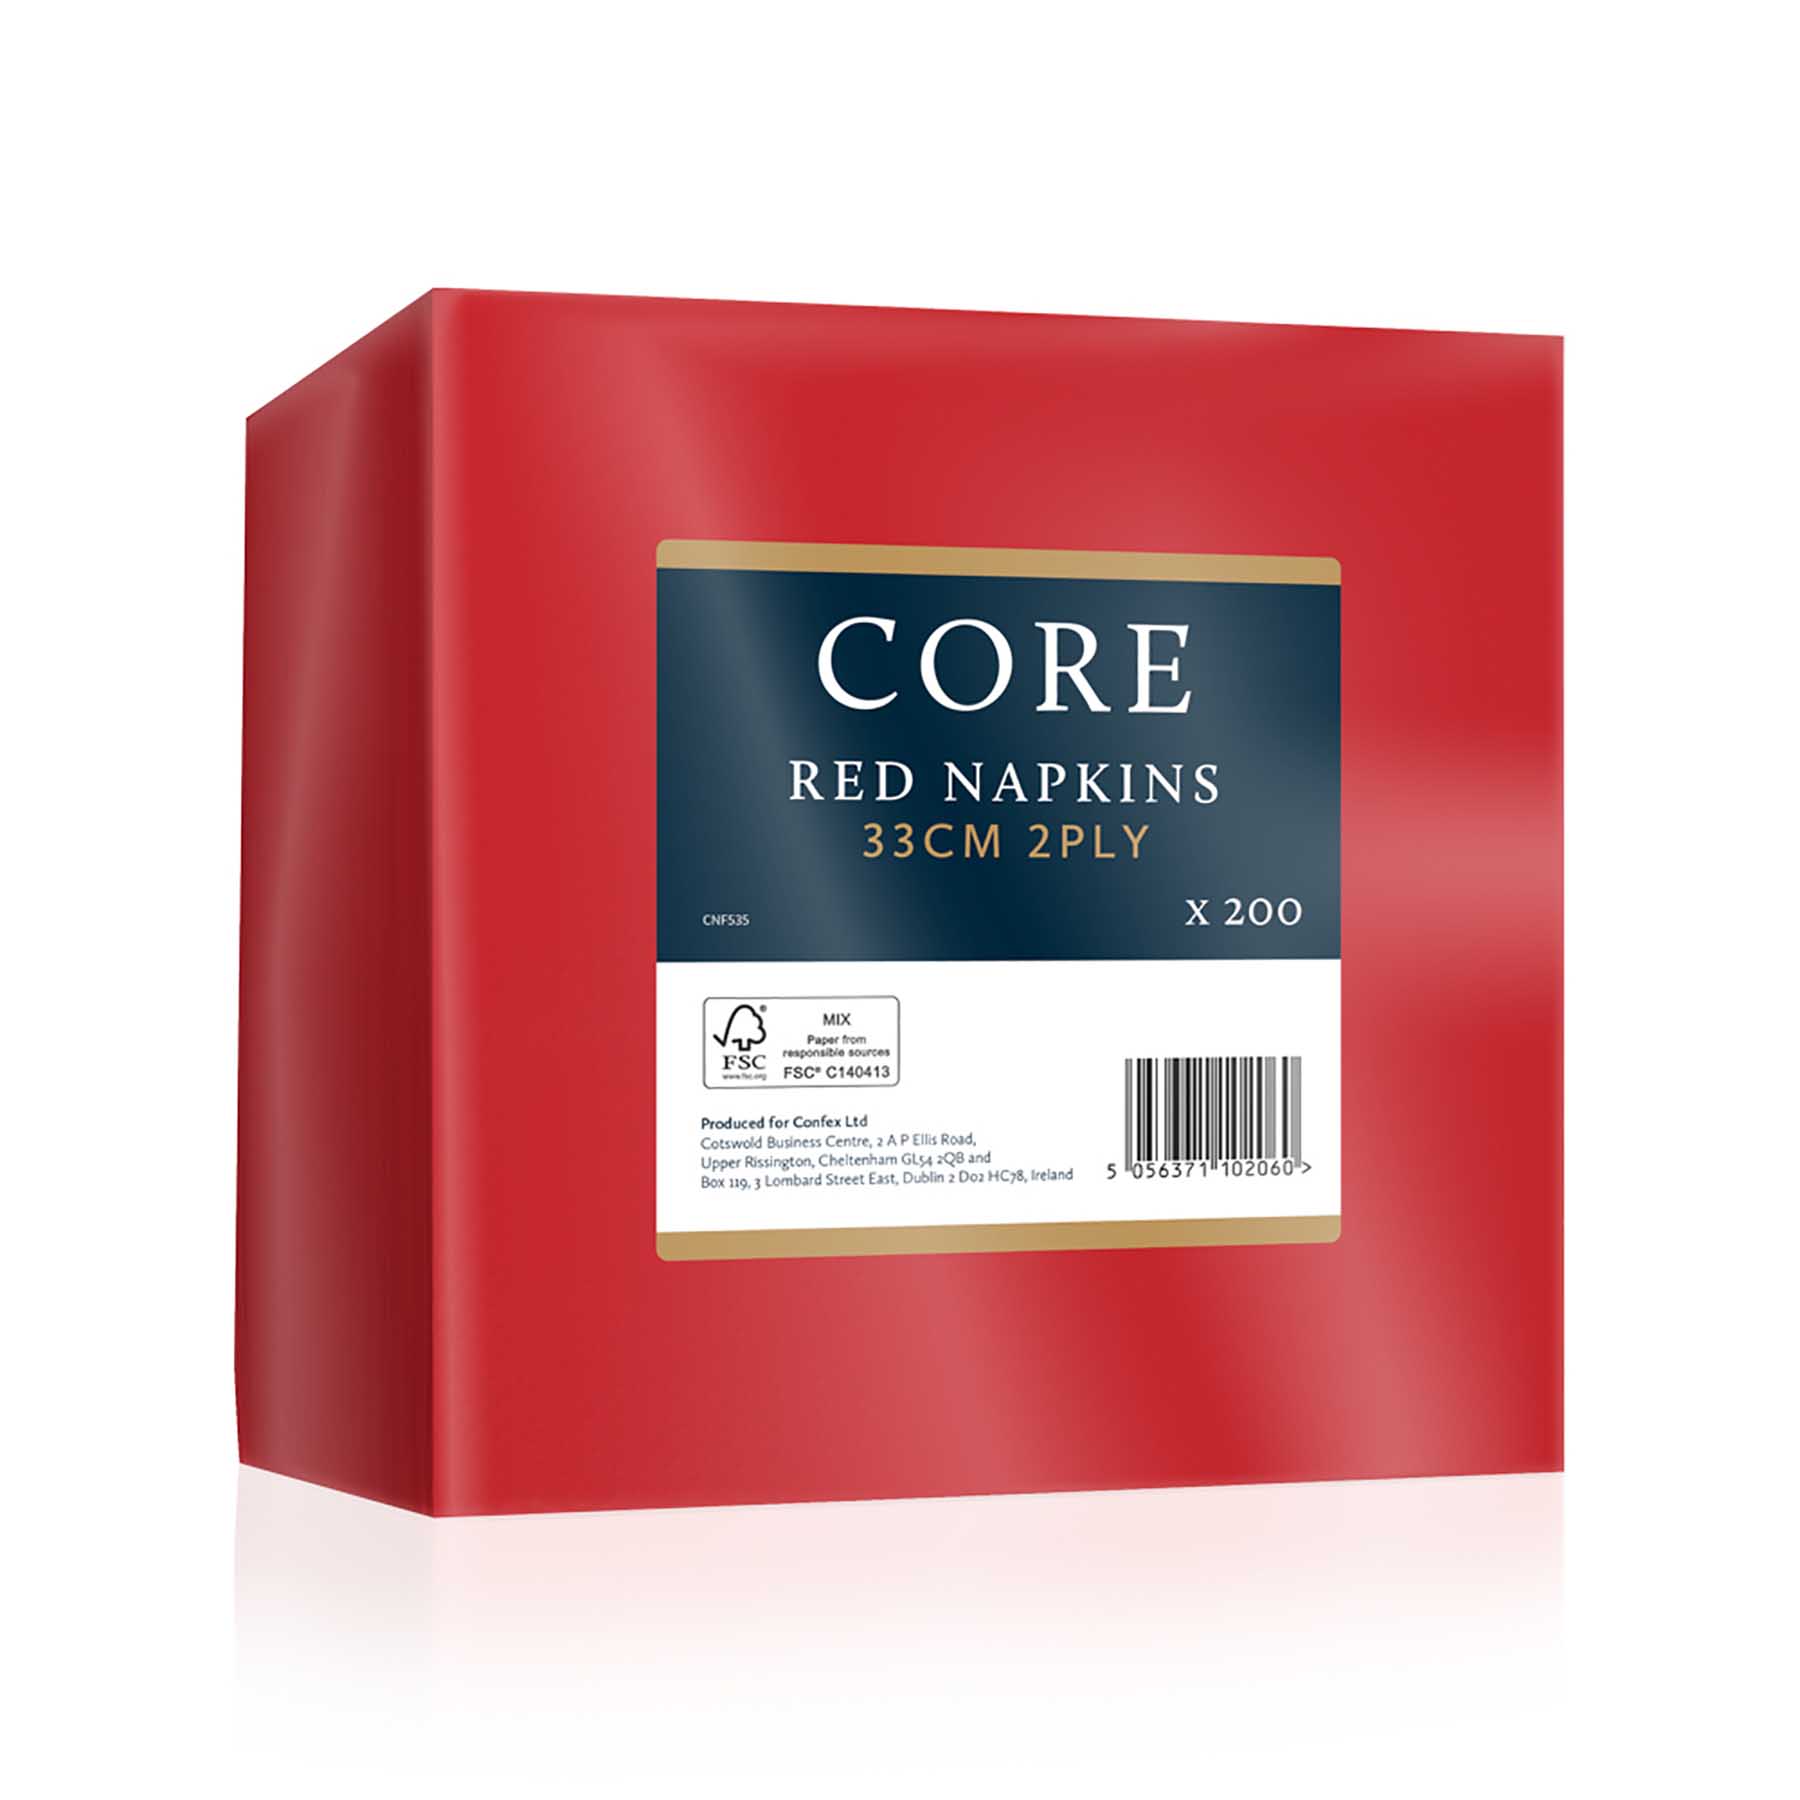 Core 33cm 2ply Red Napkins x200